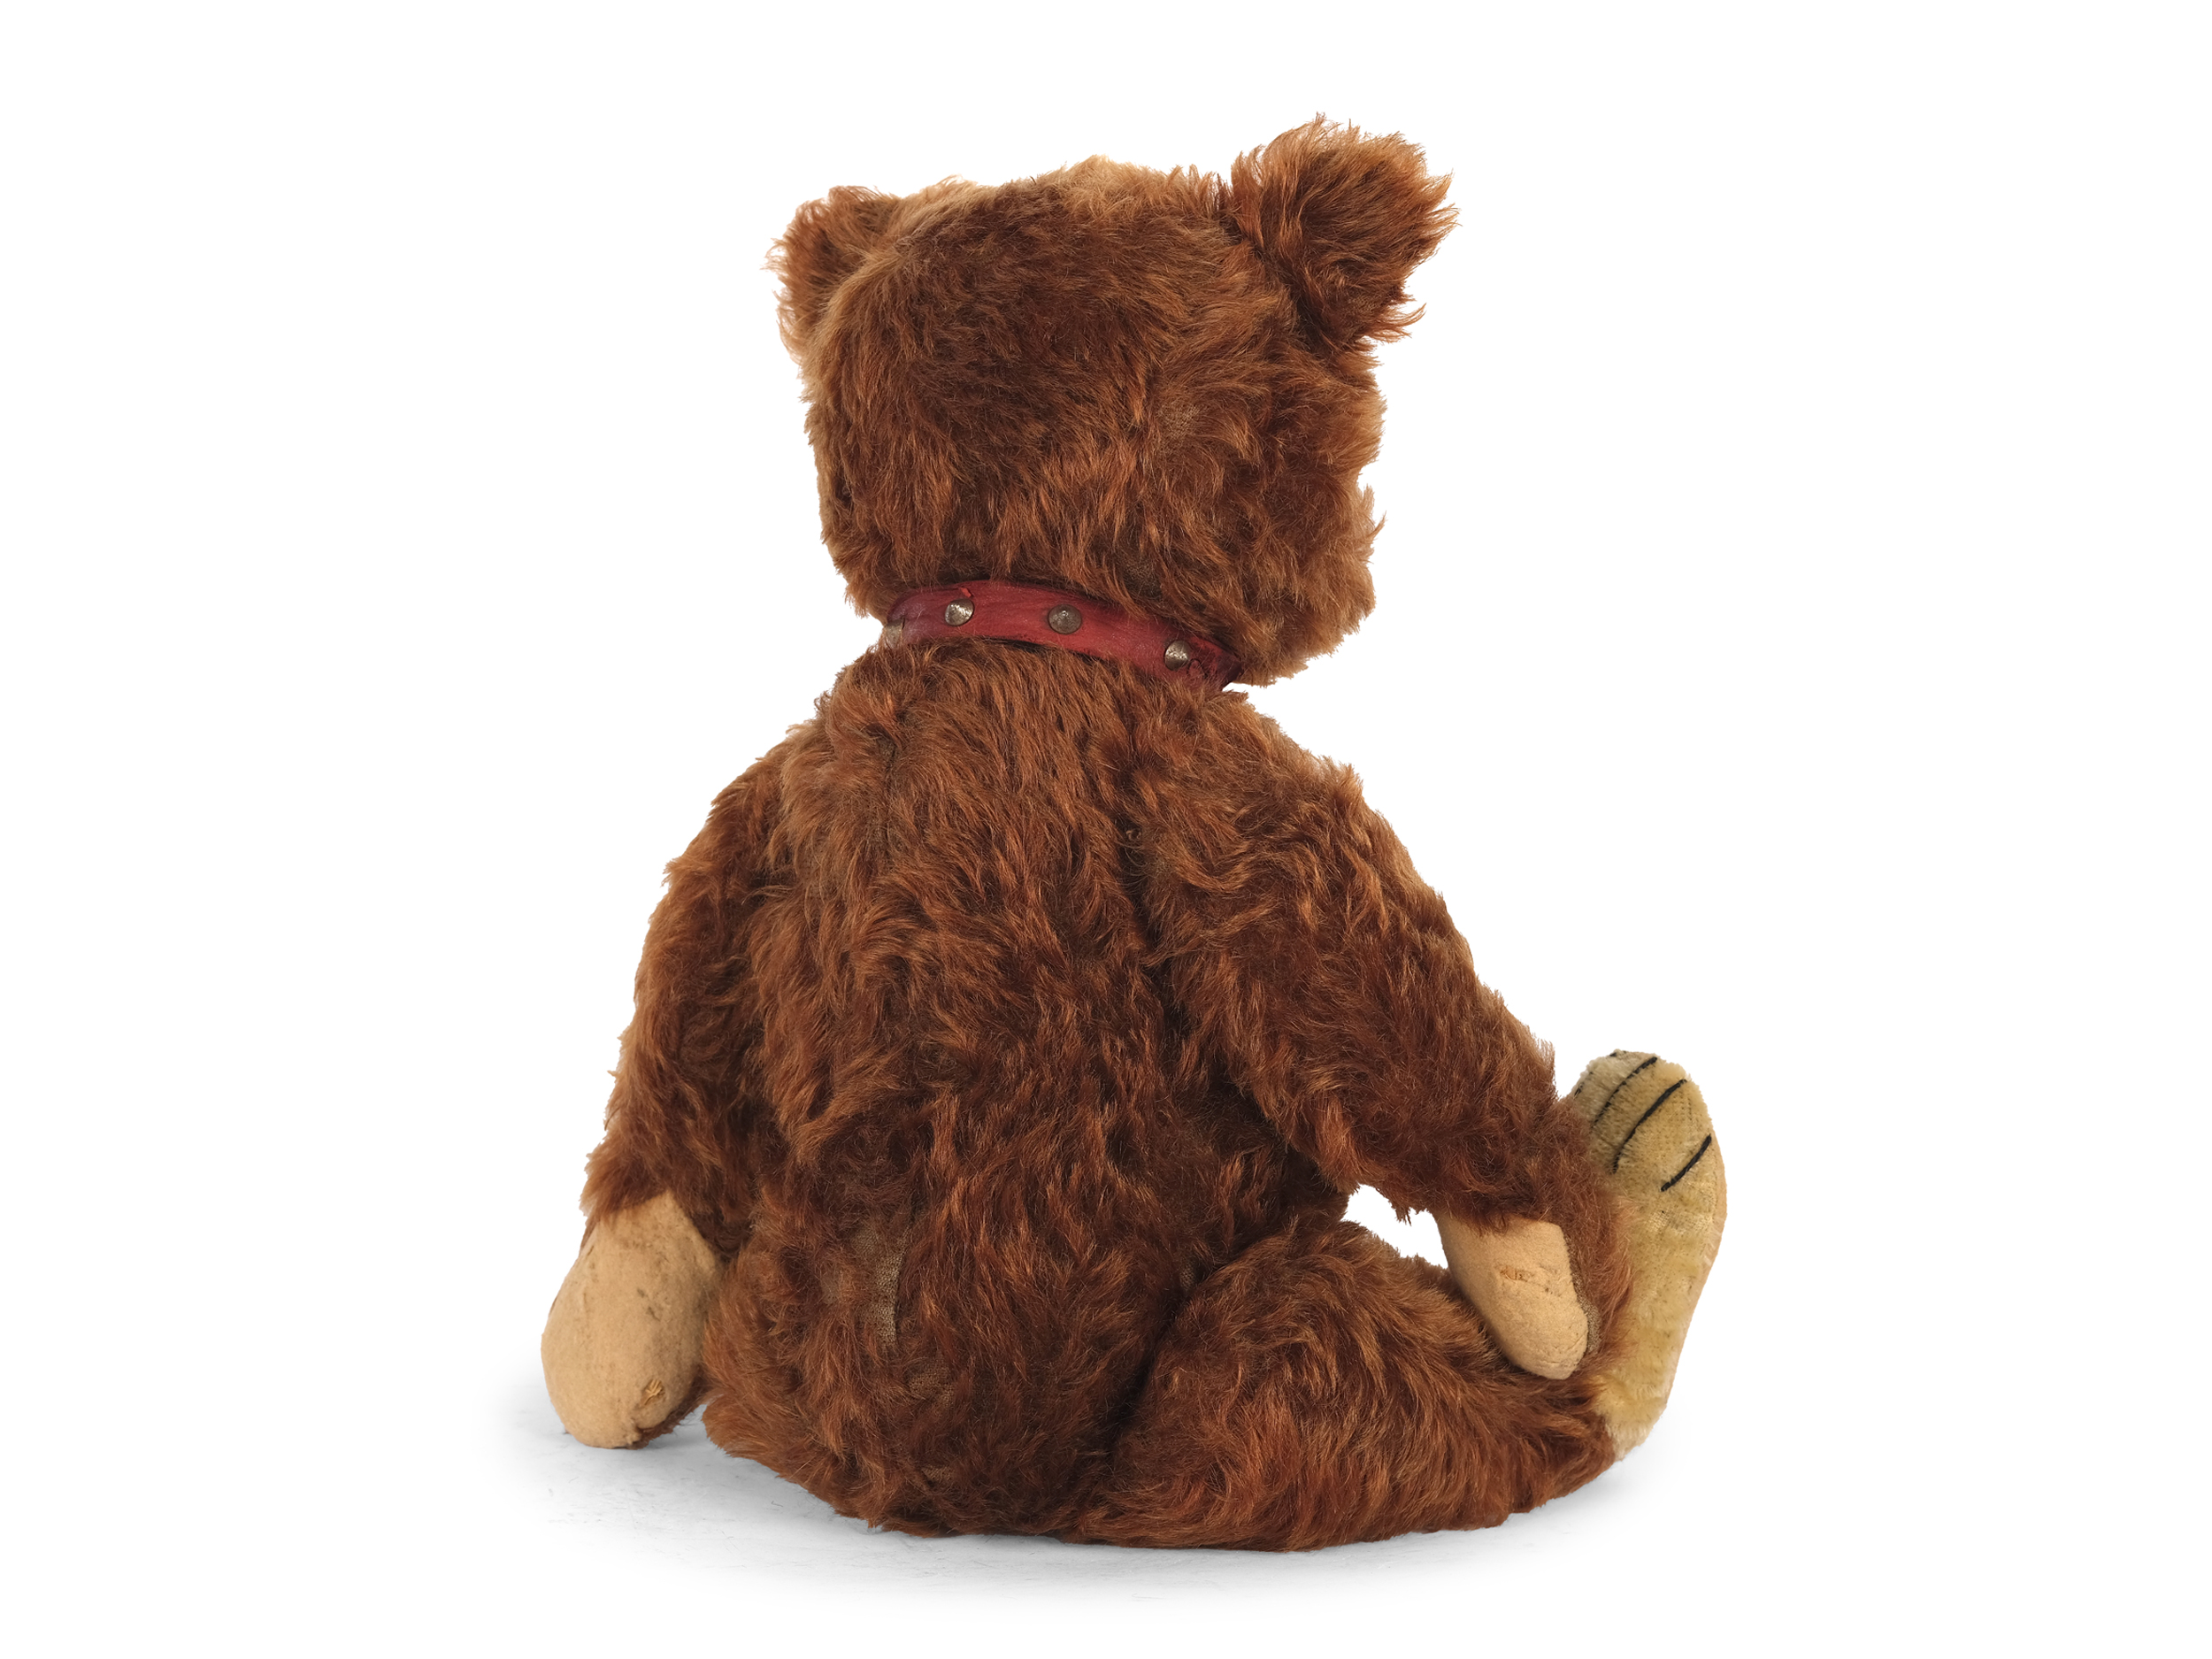 Teddy bear "Baby", Steiff - Image 4 of 4